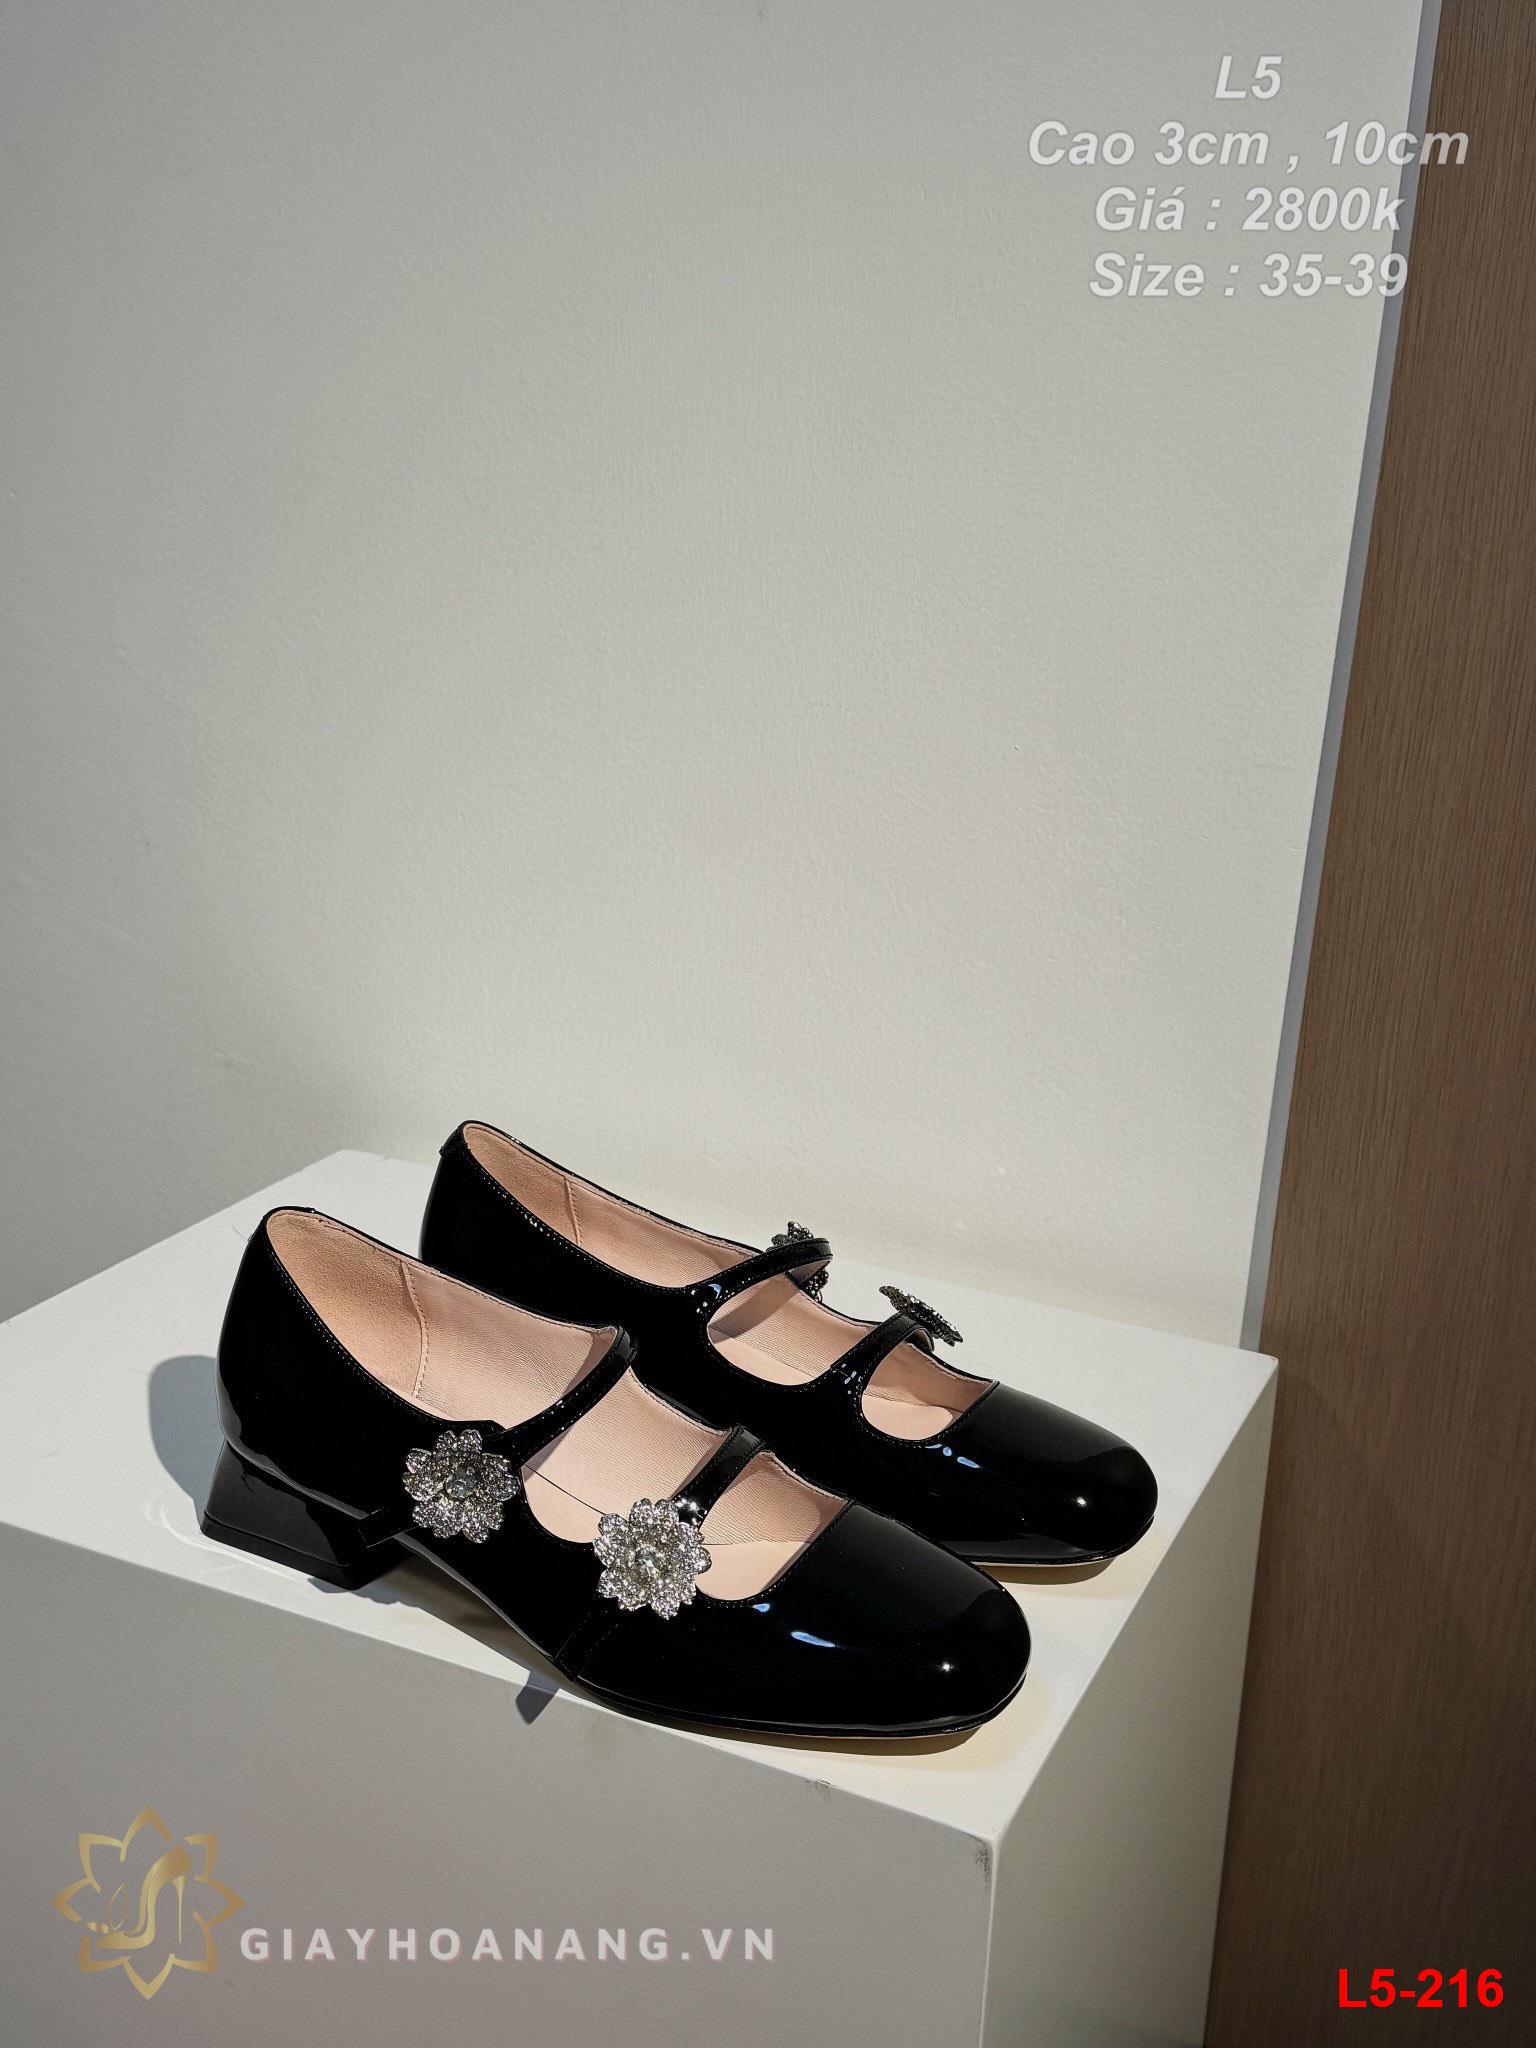 L5-216 Dior giày cao 3cm , 10cm siêu cấp